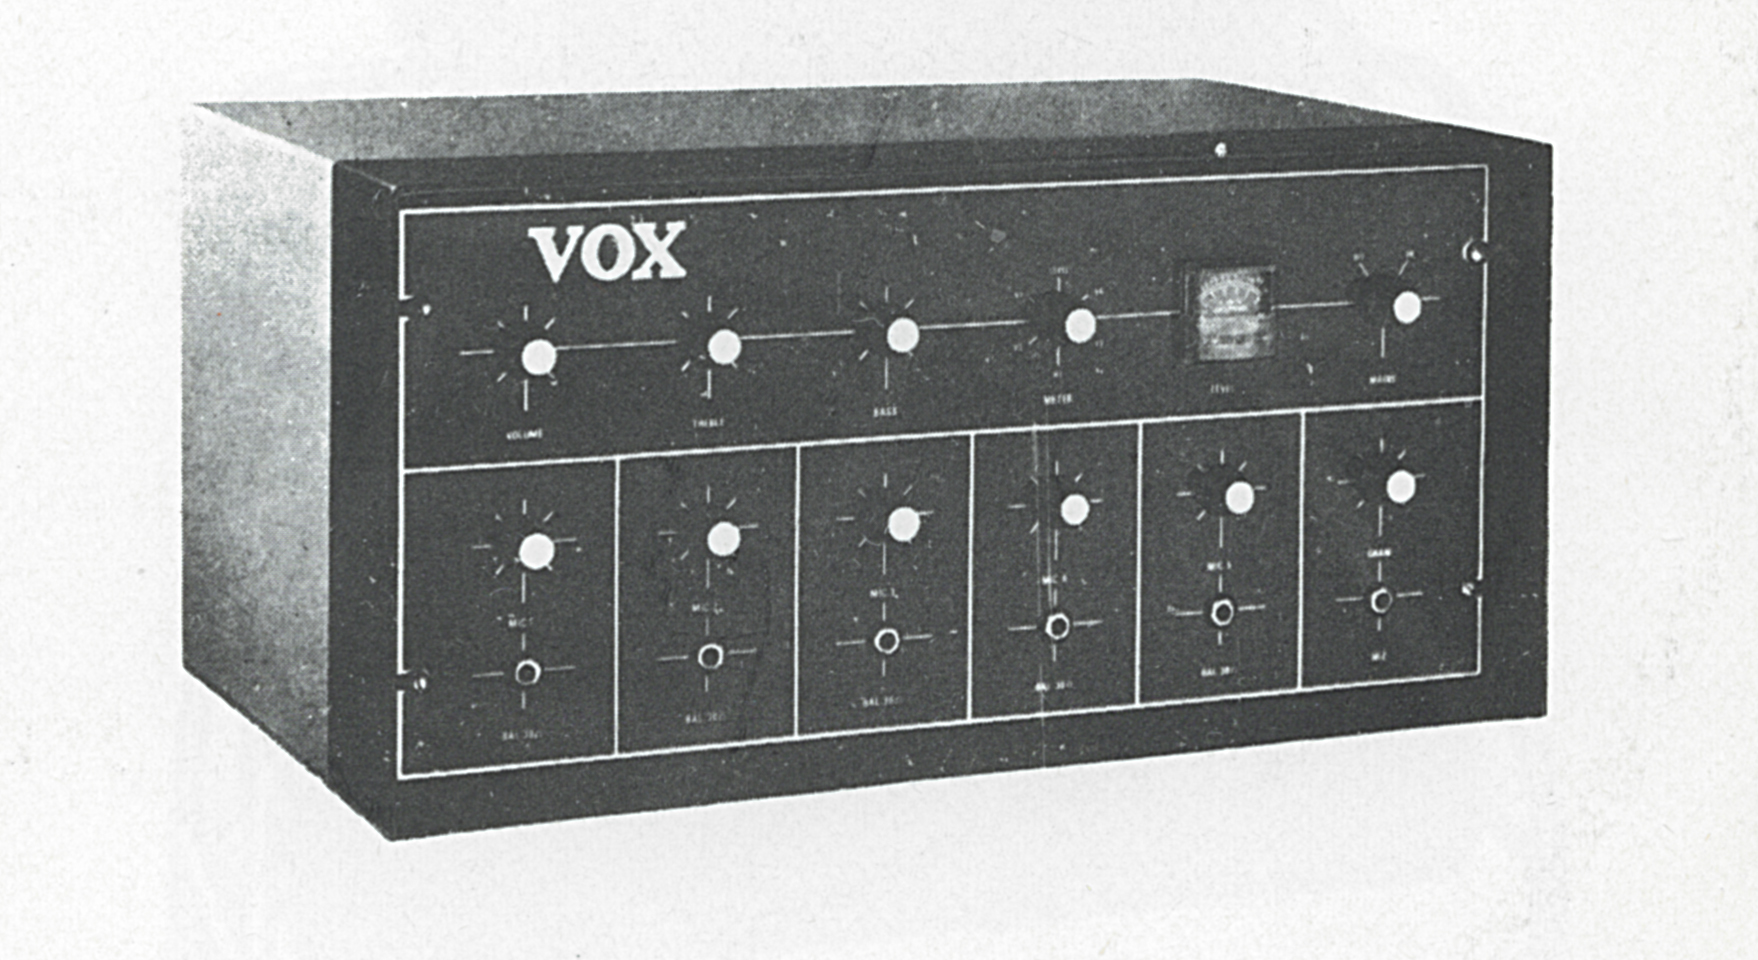 Vox MC100 public address amplifier, transistor preamp